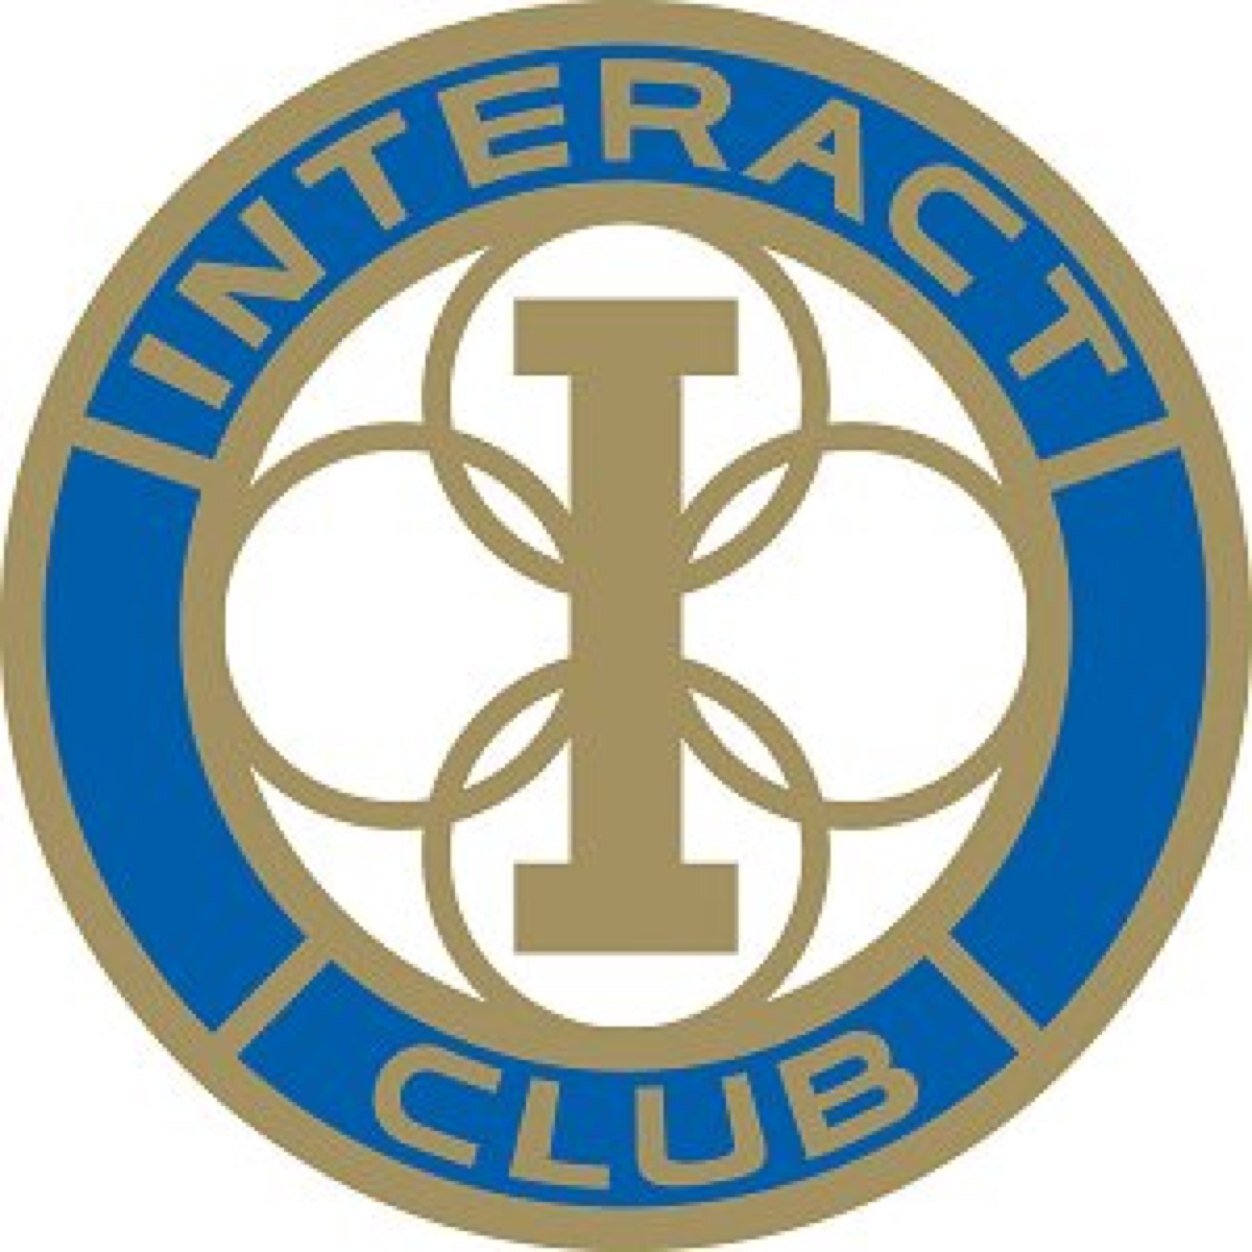 West G Interact Club